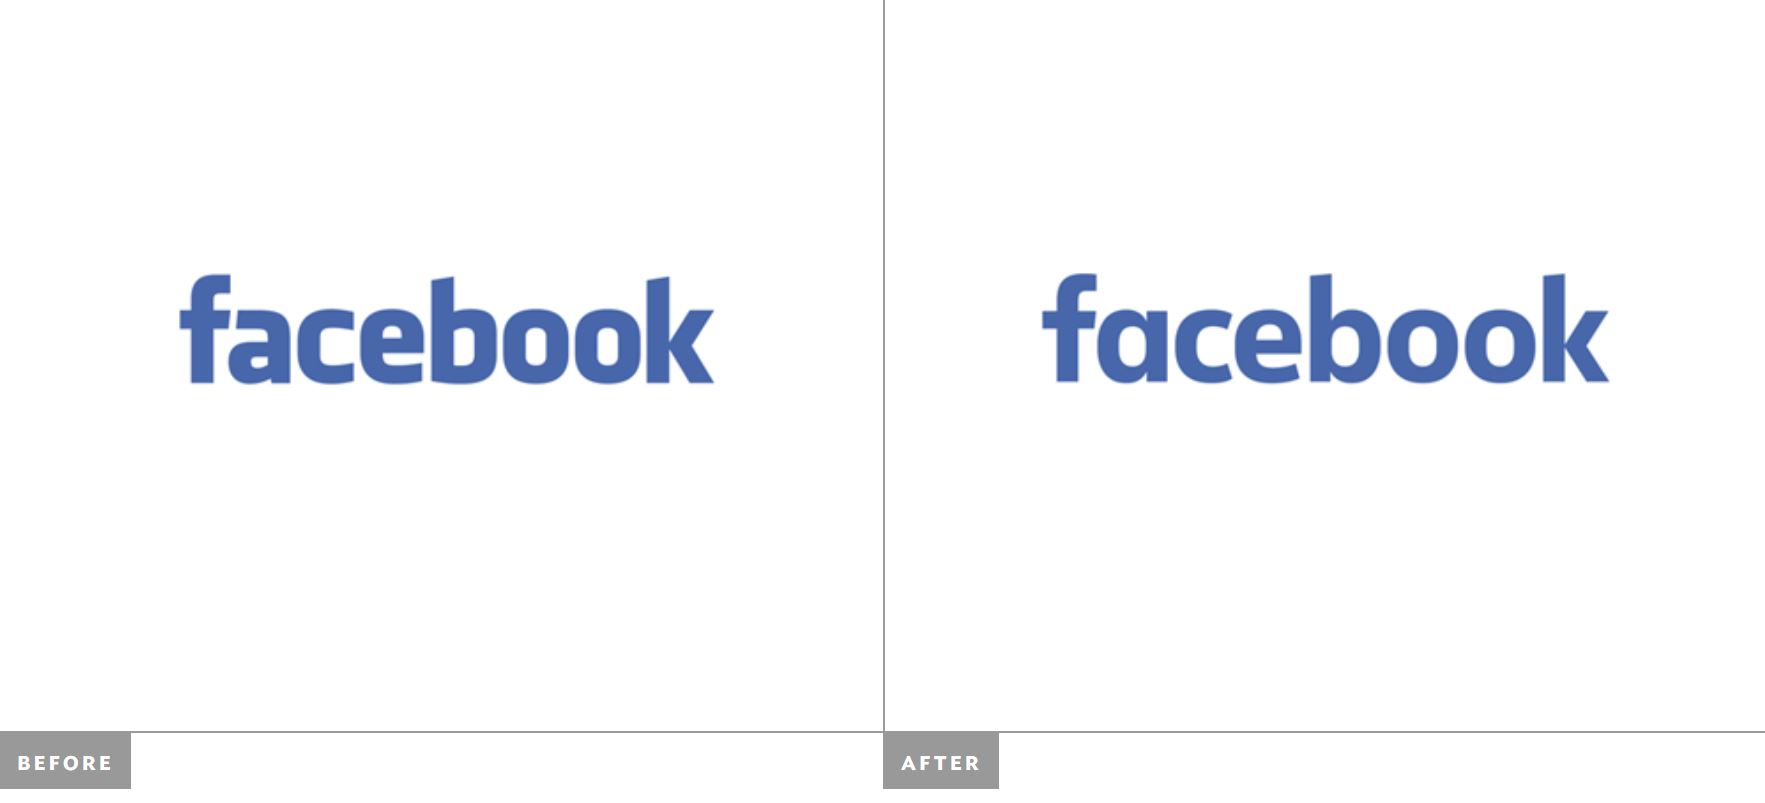 New Facebook vector logo 2015 (.eps file) free download